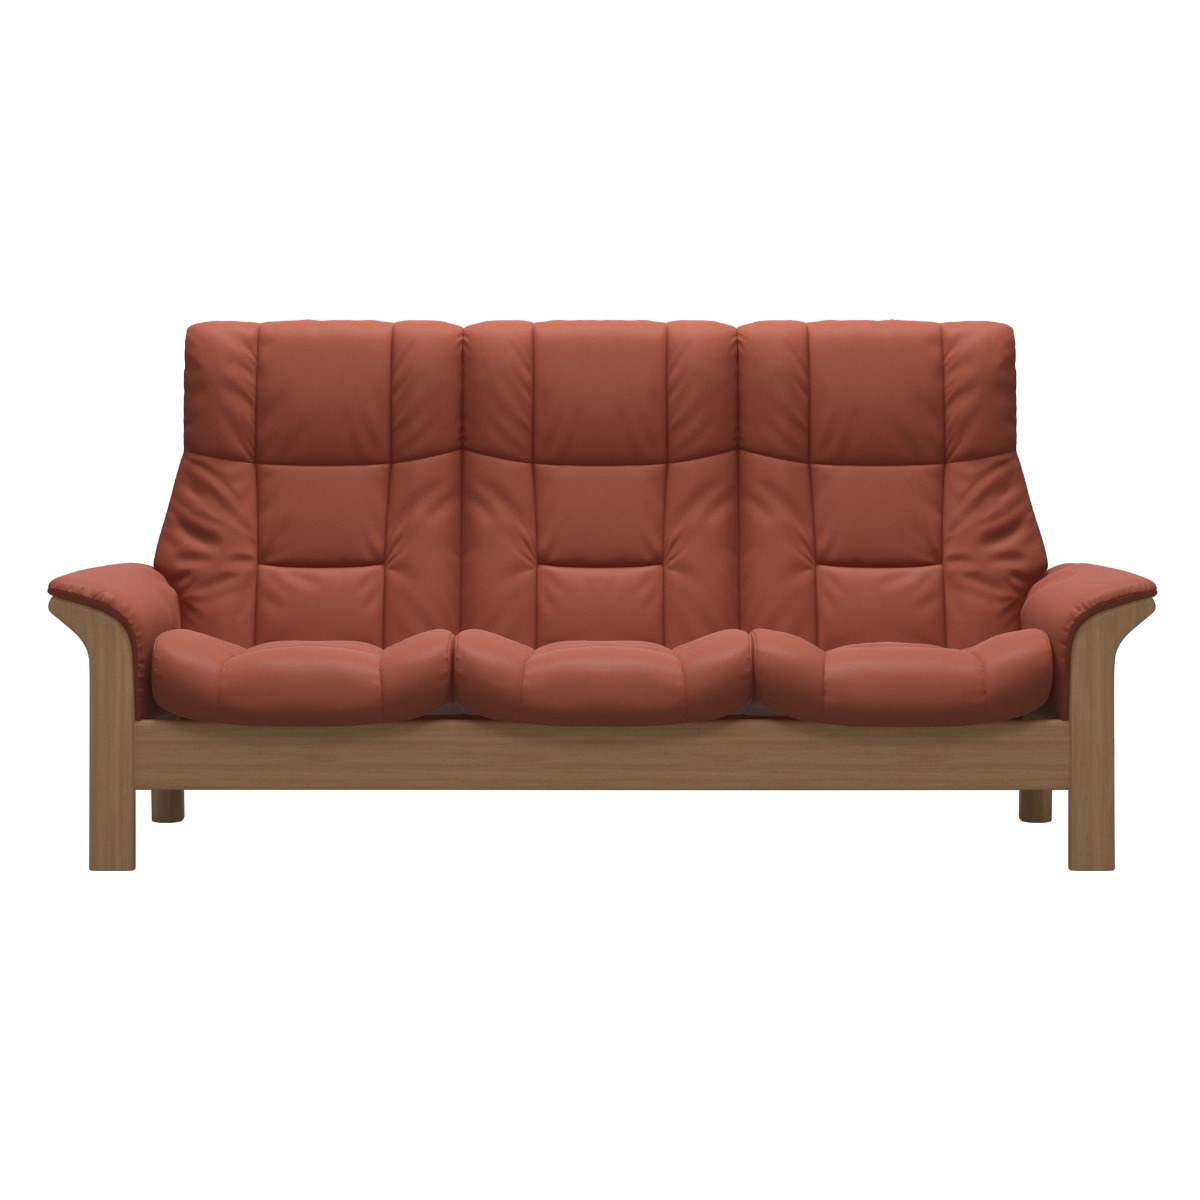 Stressless Windsor High Back 3 Seater Recliner Sofa, Orange Leather | Barker & Stonehouse